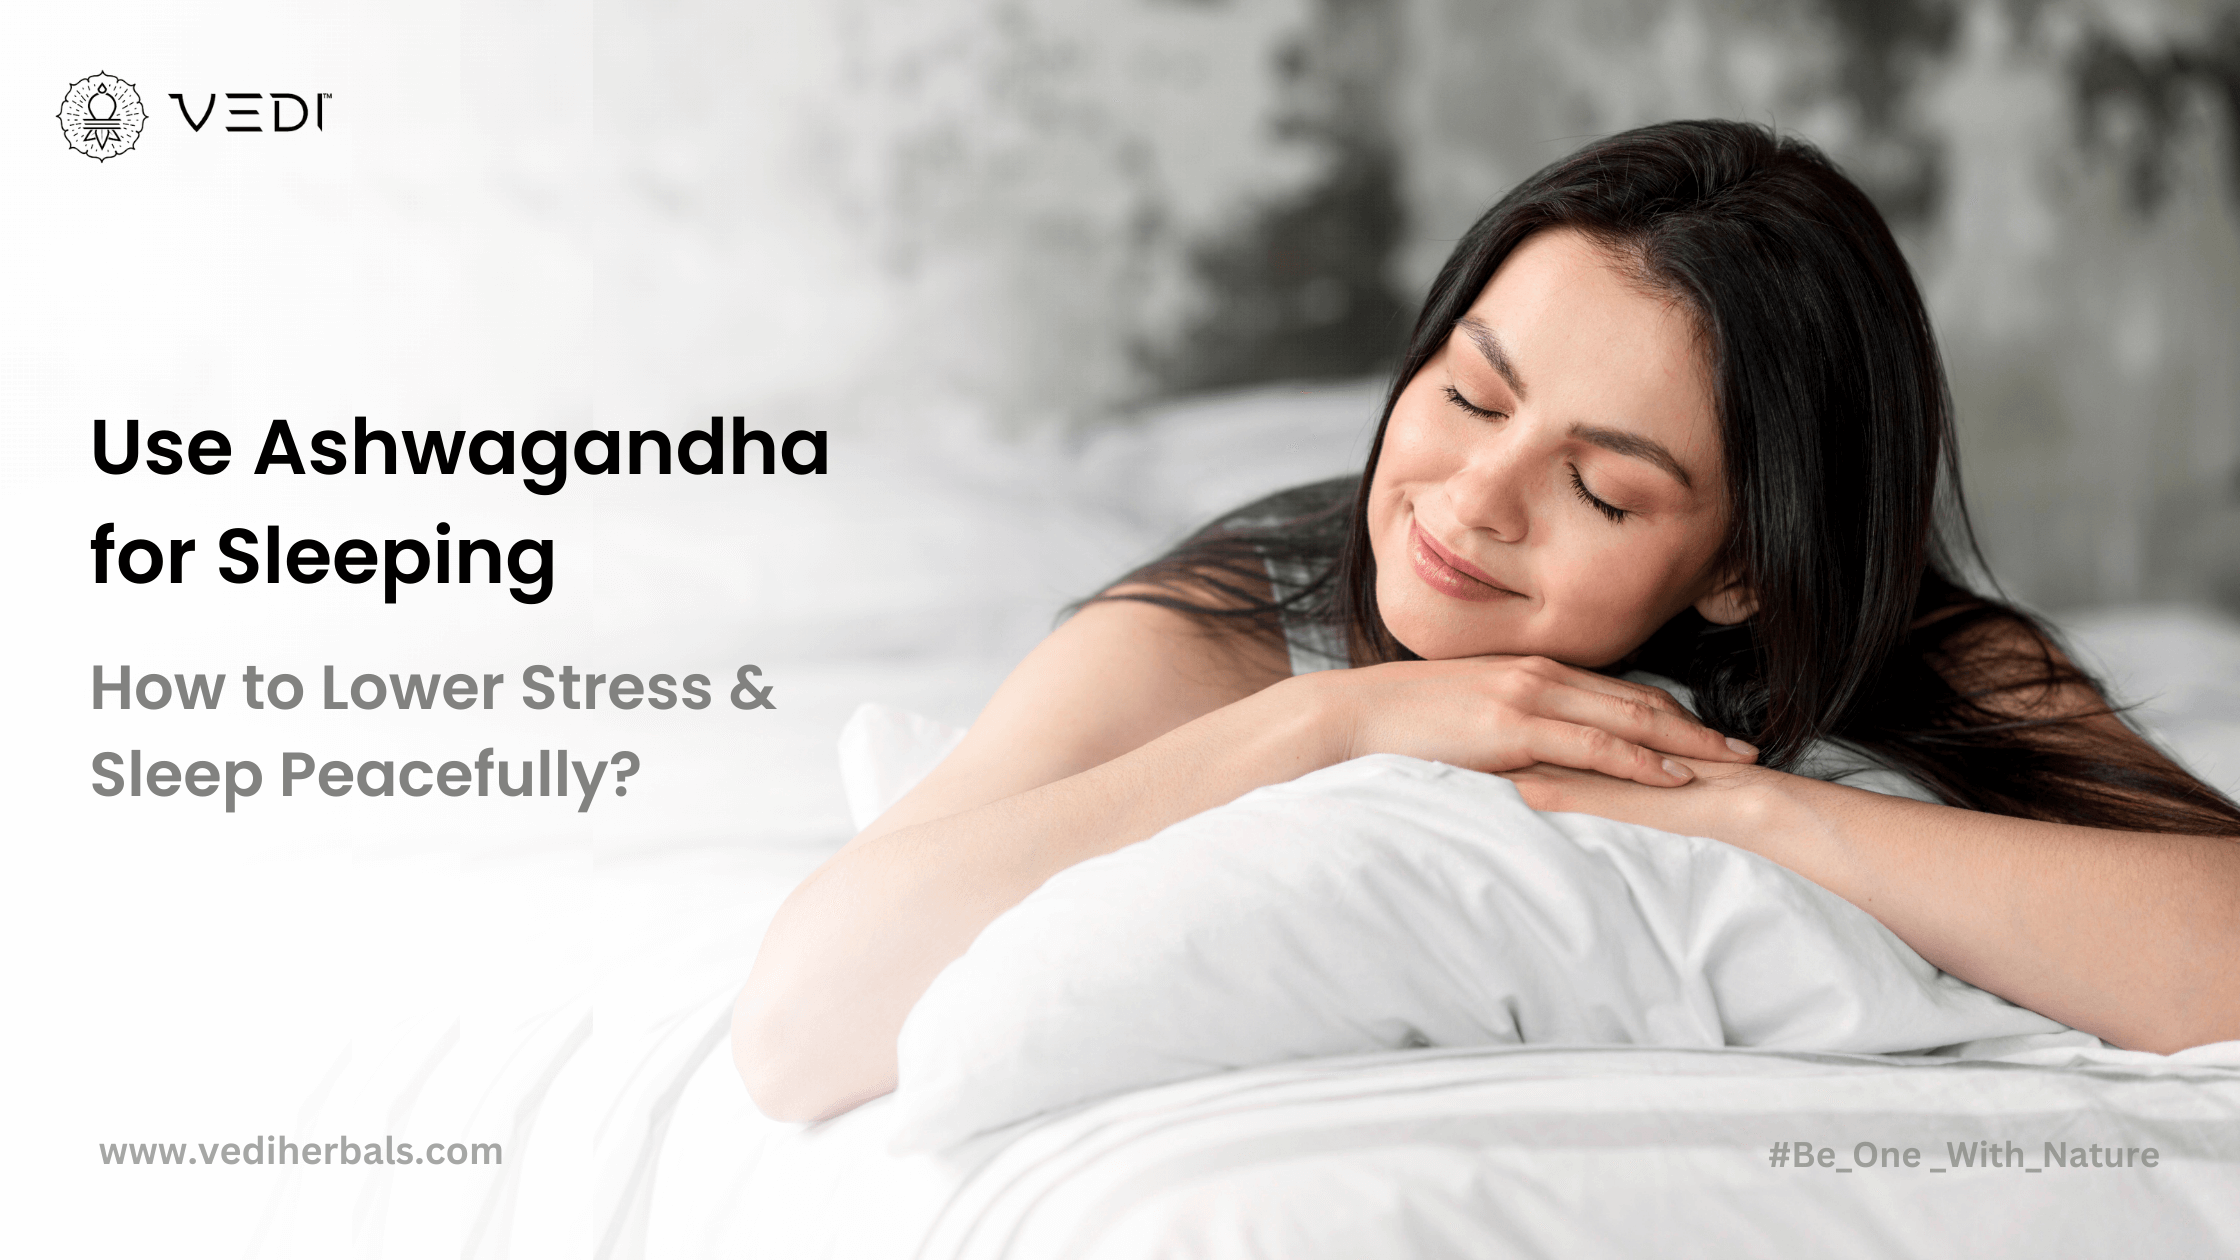 Use Ashwagandha for Sleeping: How to Lower Stress & Sleep Peacefully?